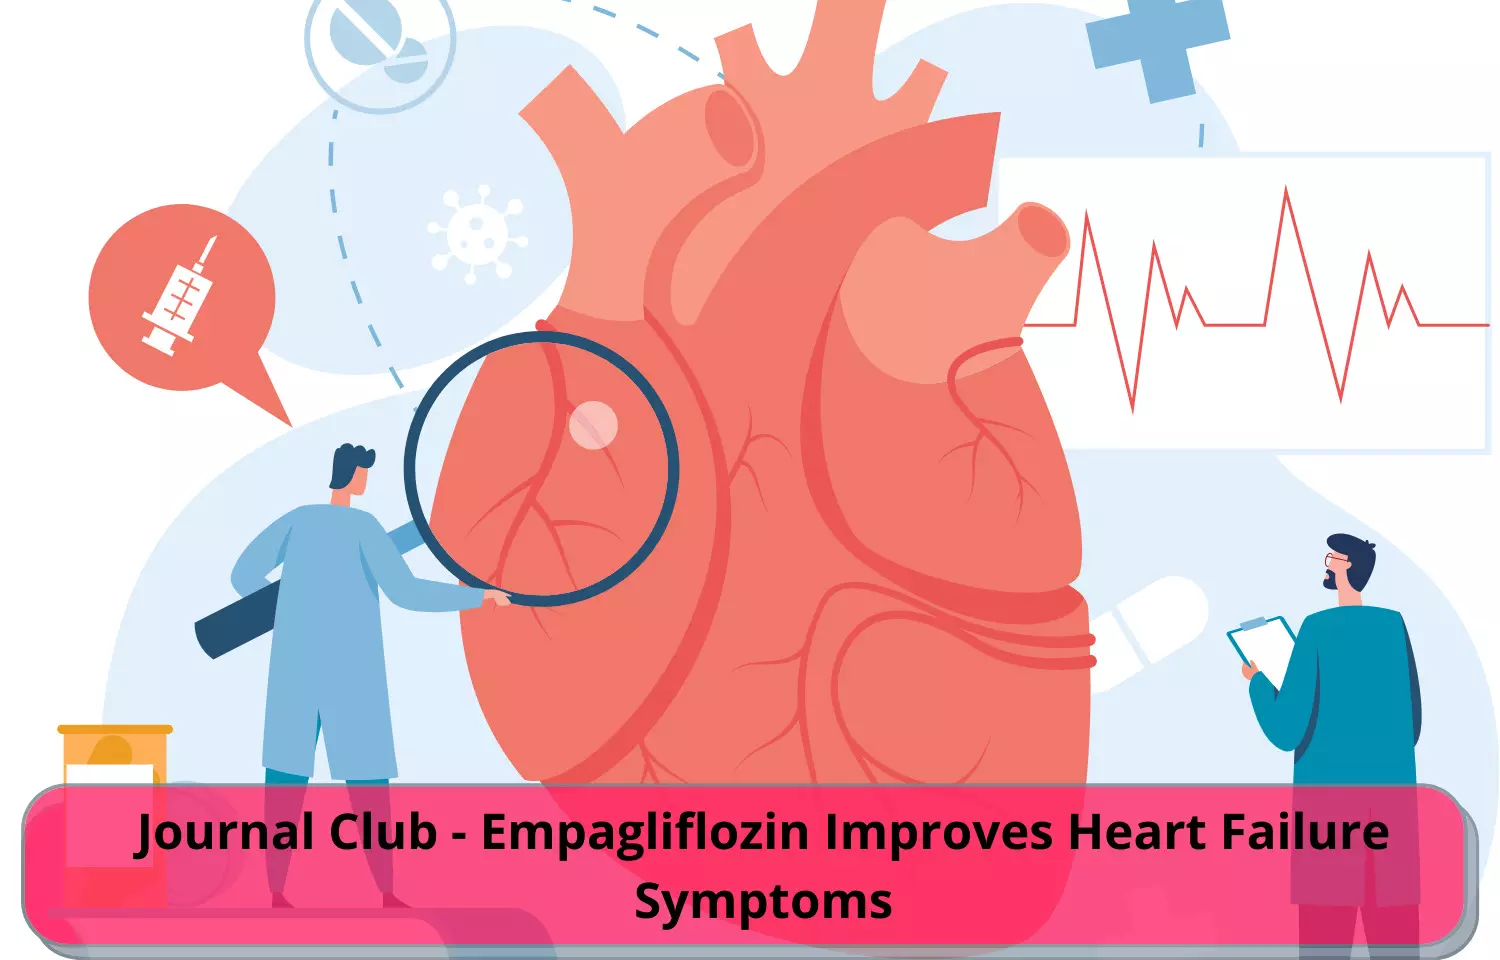 Journal Club - Empagliflozin to Improve Heart Failure Symptoms